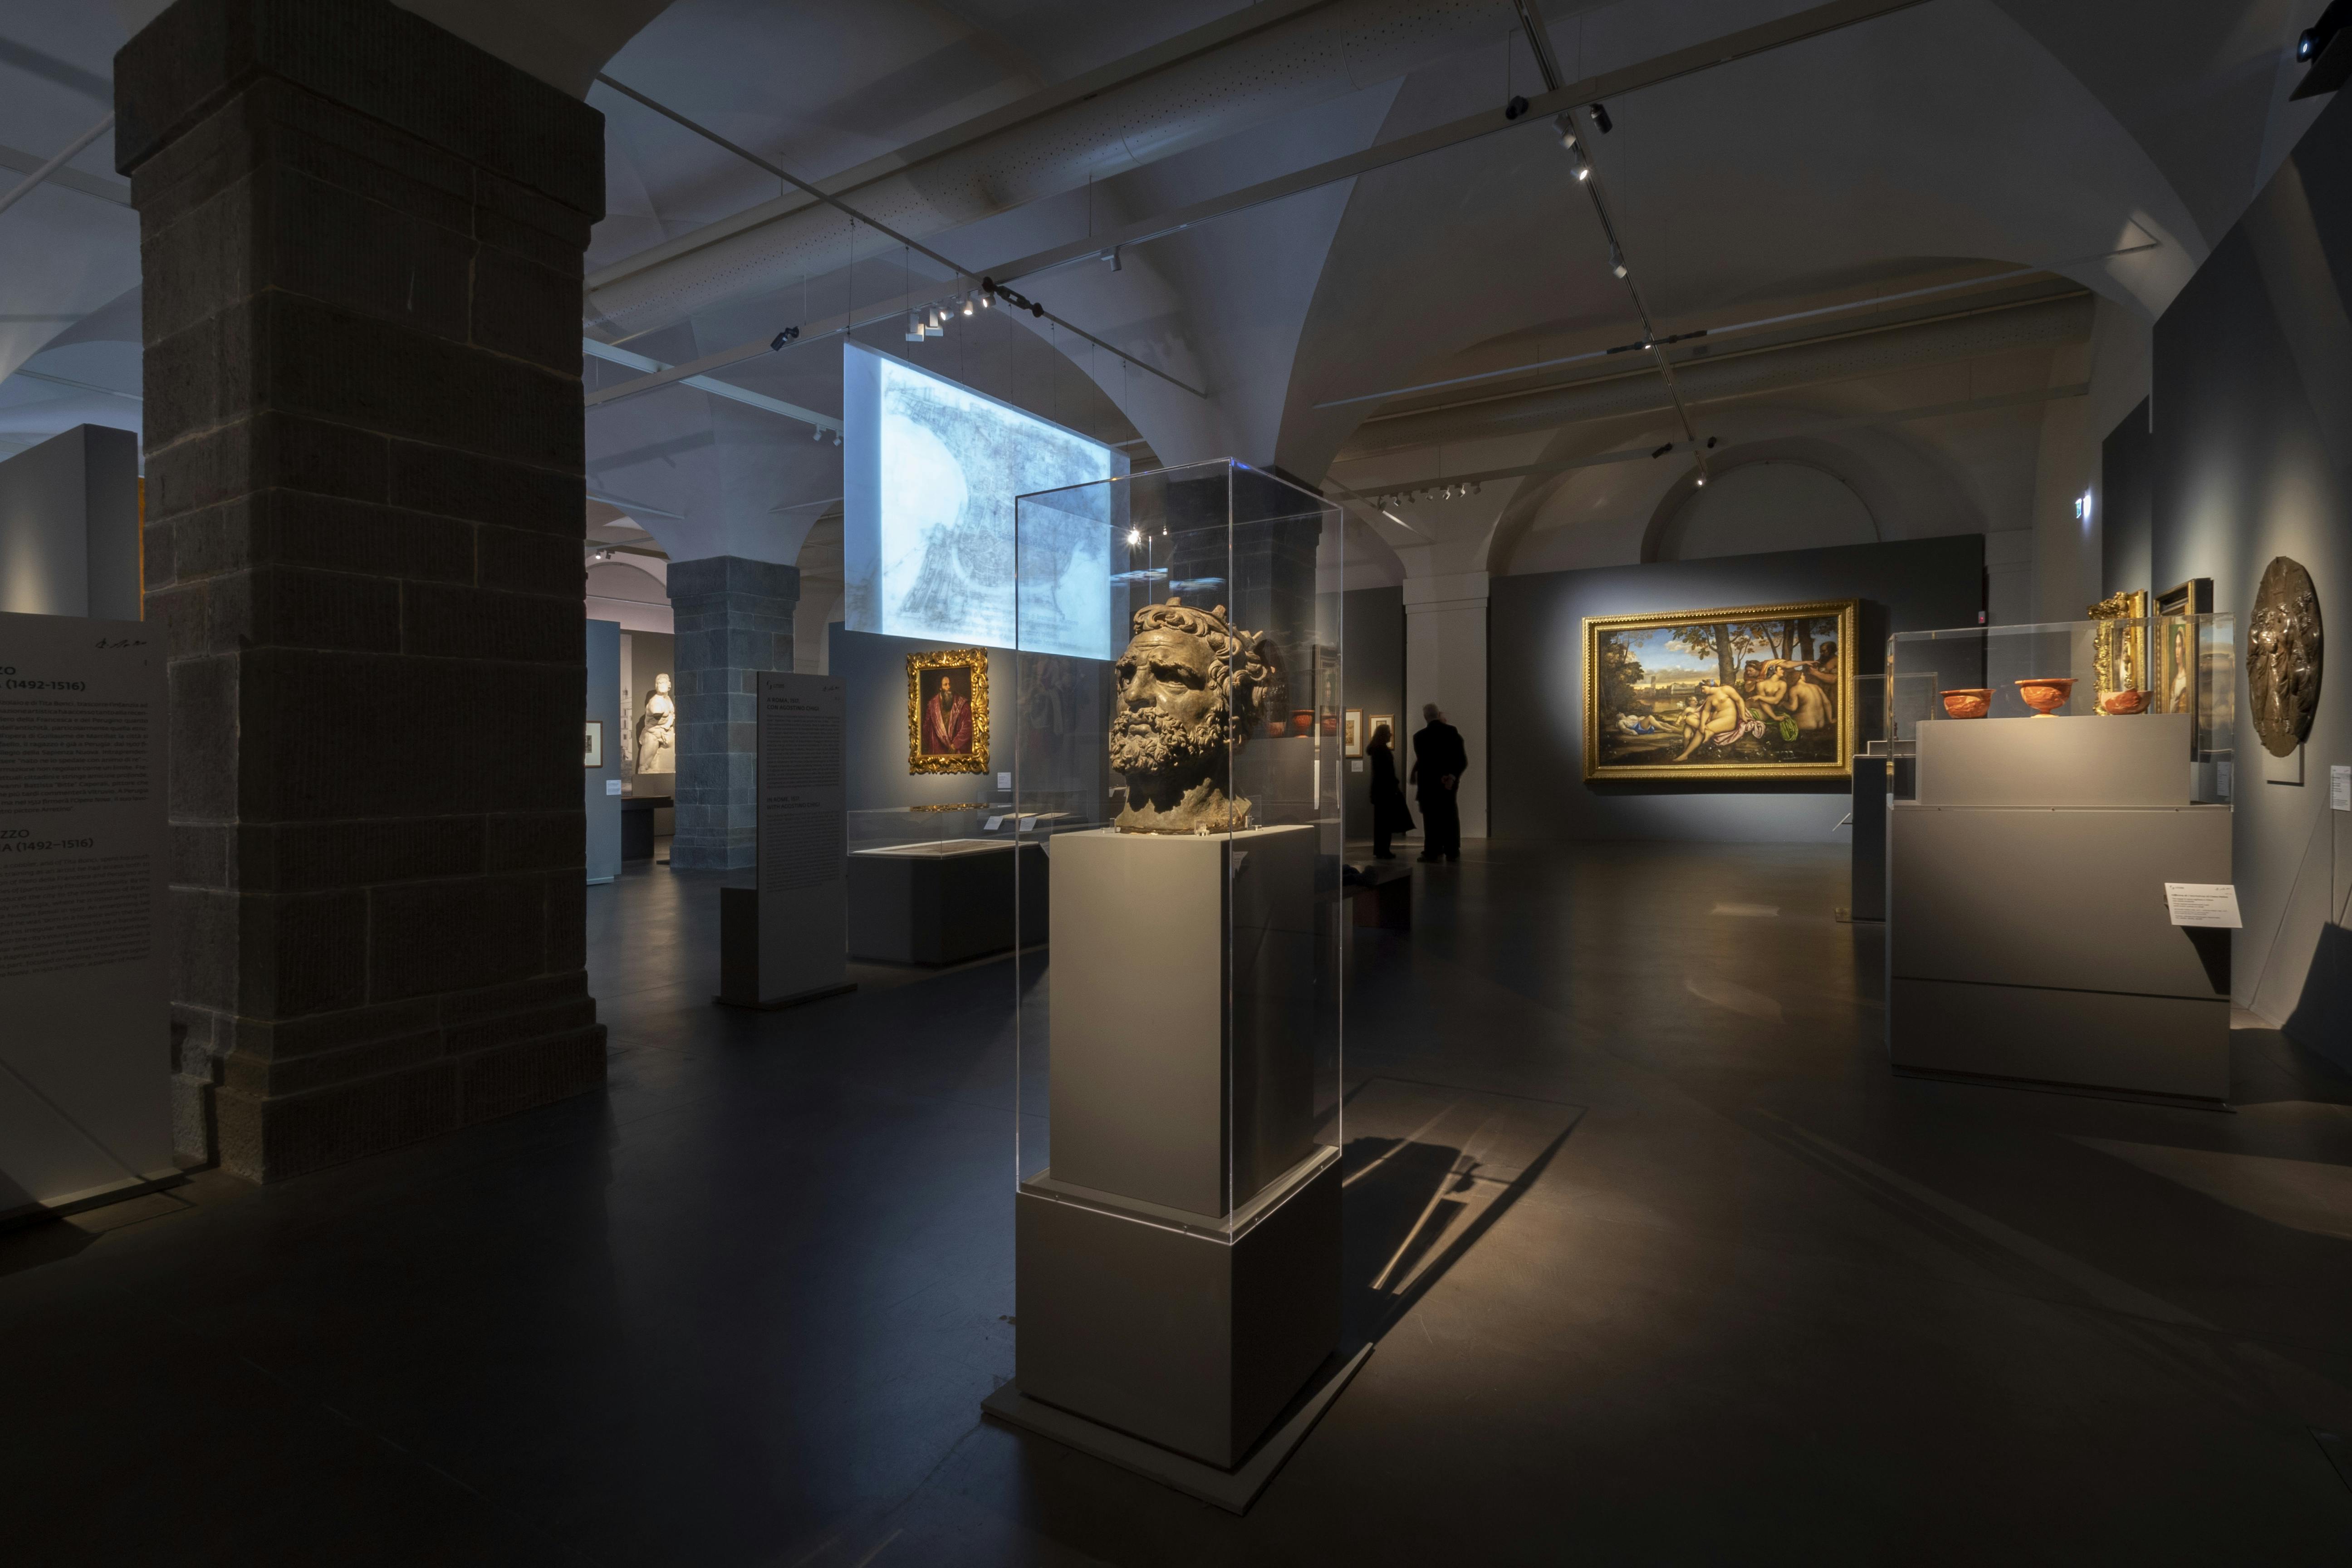 Pietro Aretino and the Art of the Renaissance